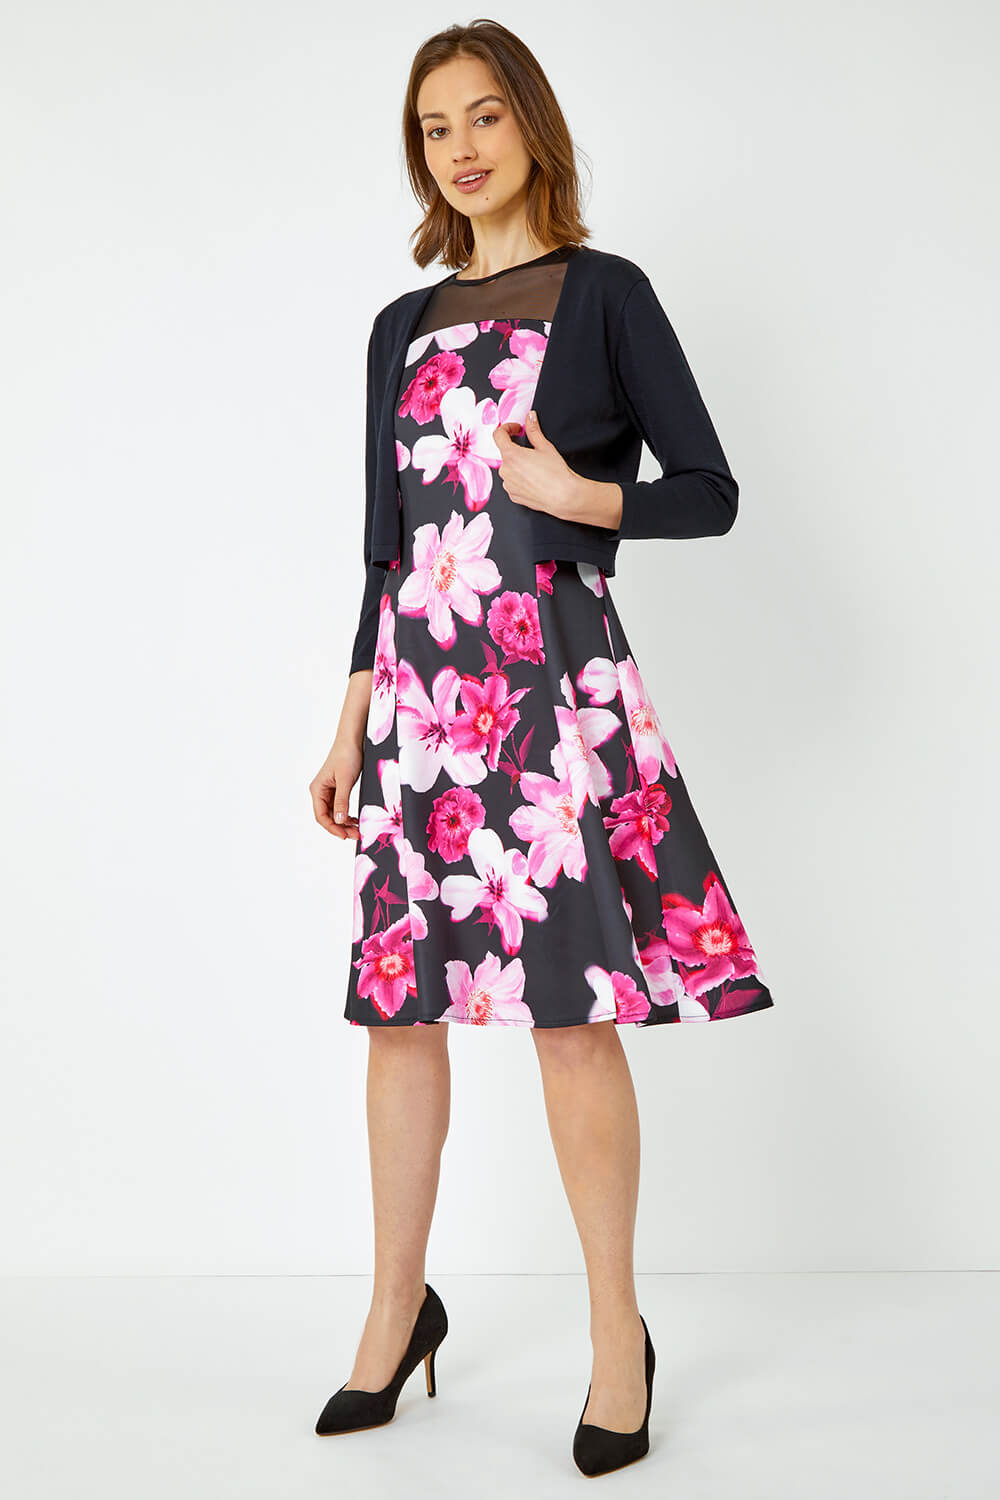 CERISE Premium Stretch Floral Mesh Dress, Image 5 of 5